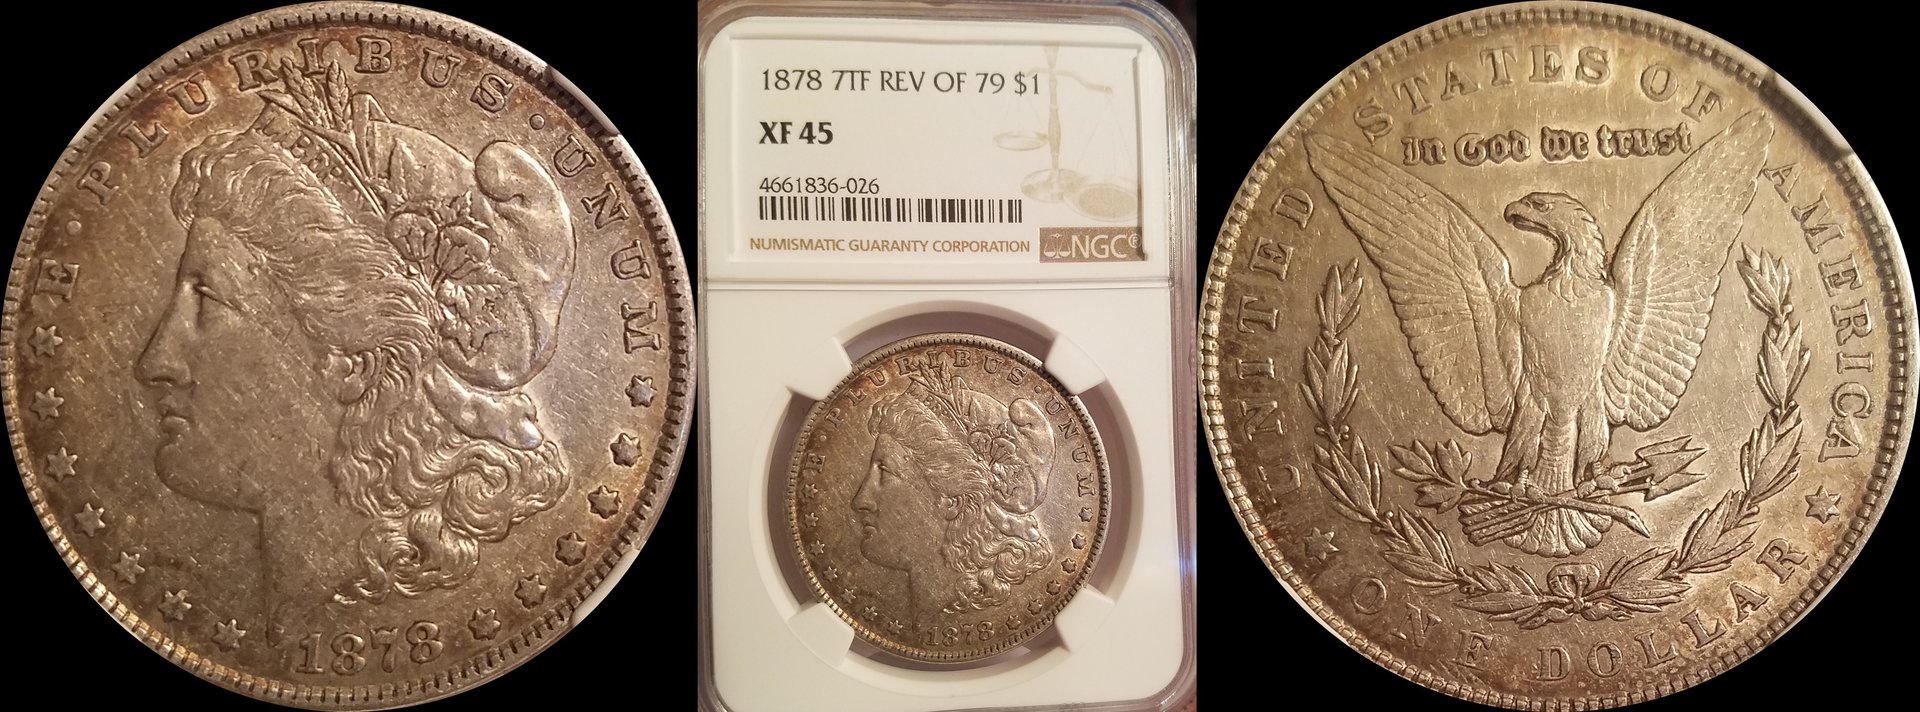 1878 $1 7tf RO 79 3a-horz.jpg